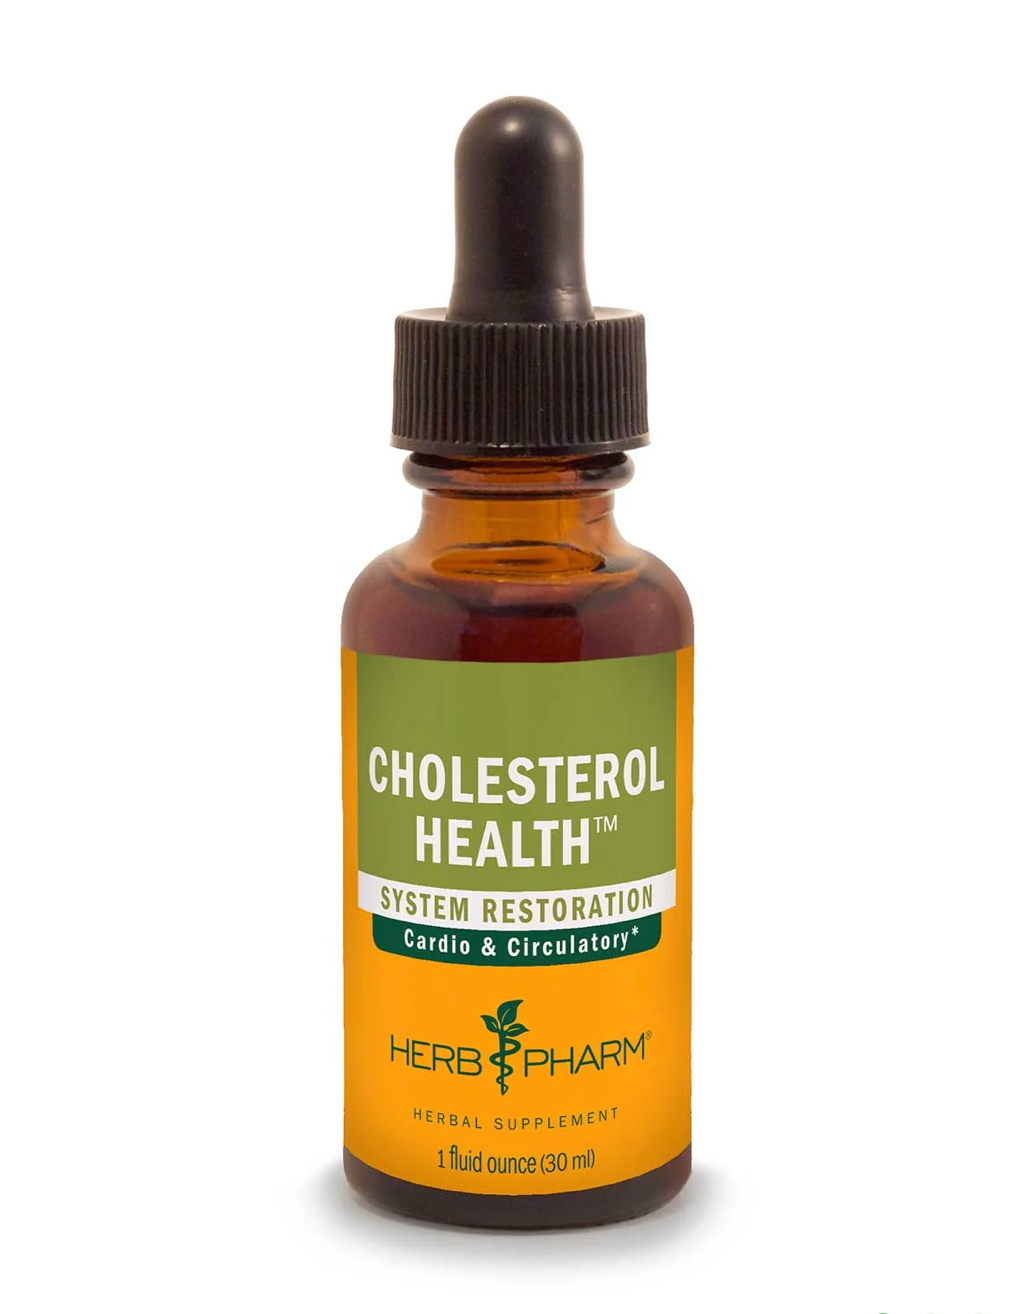 Cholesterol Health Extract